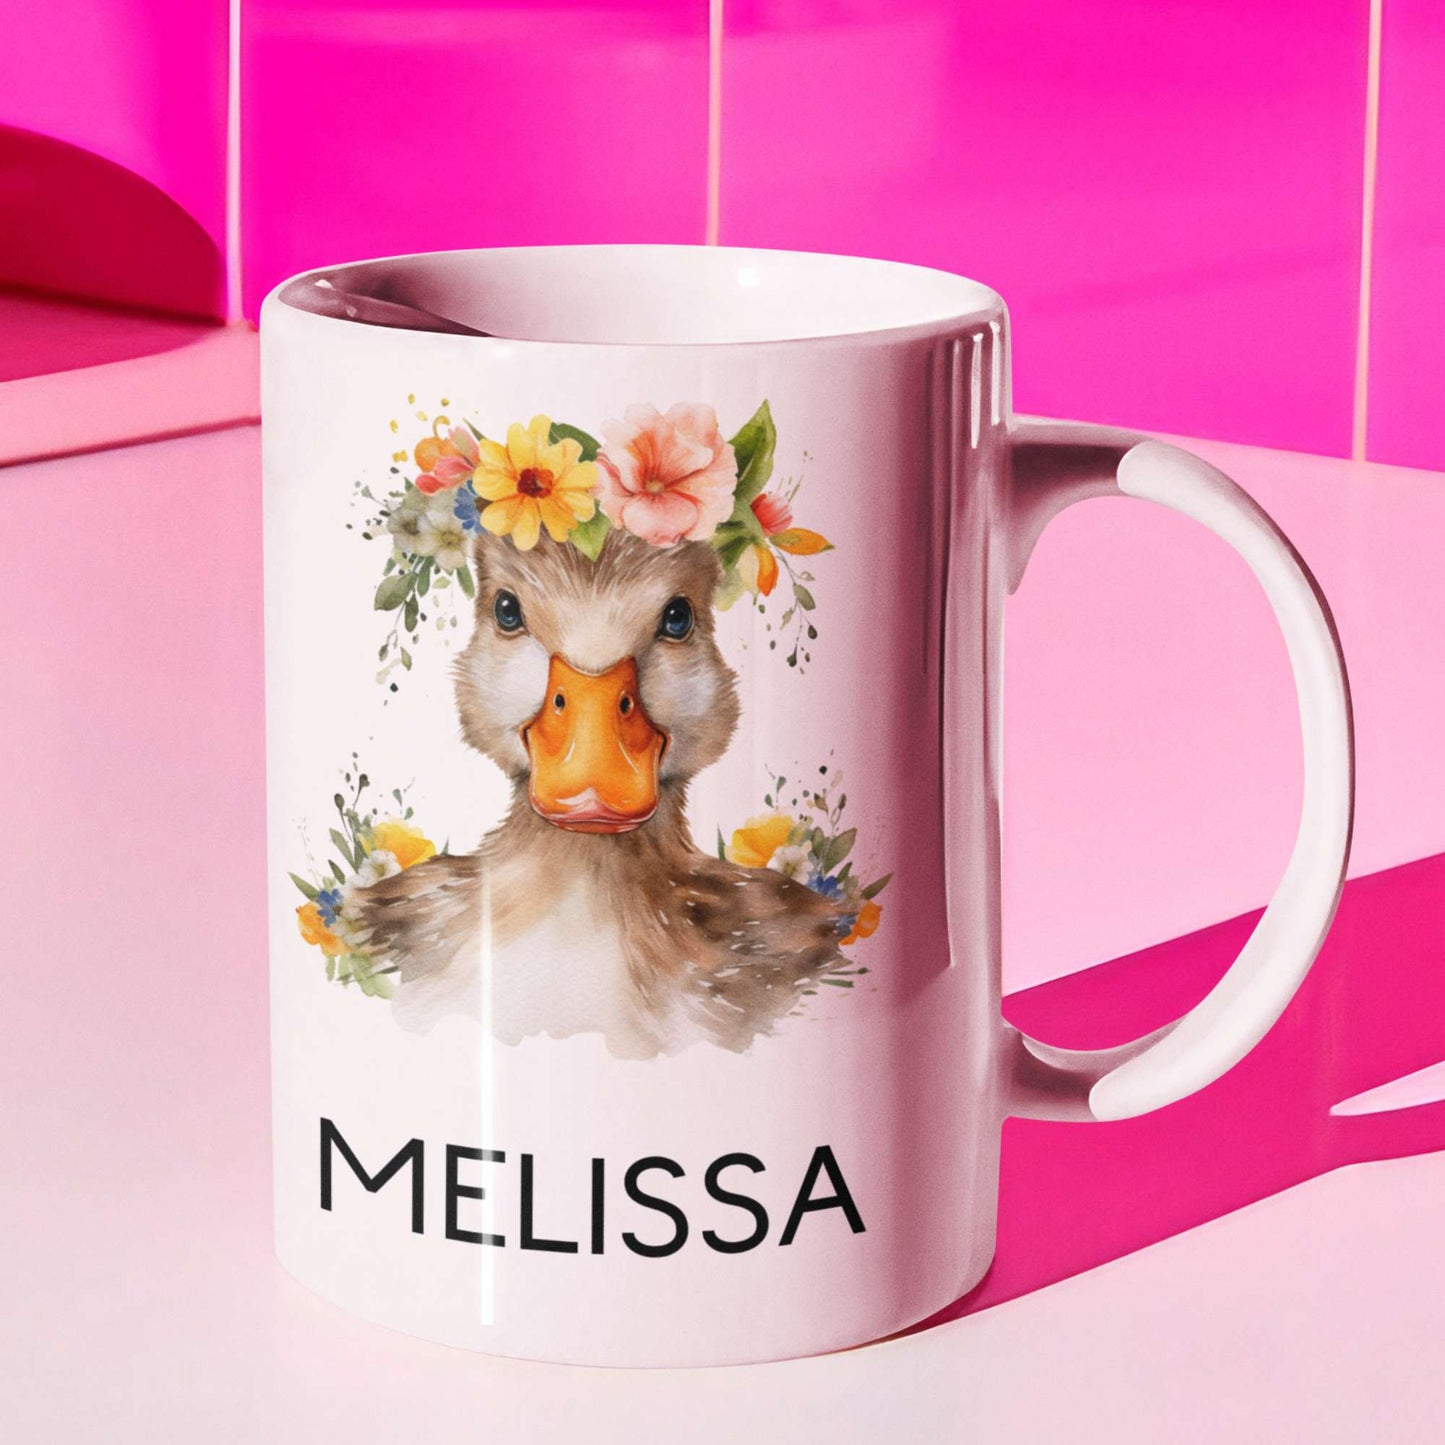 Personalised animal mugs coasters or tumbler